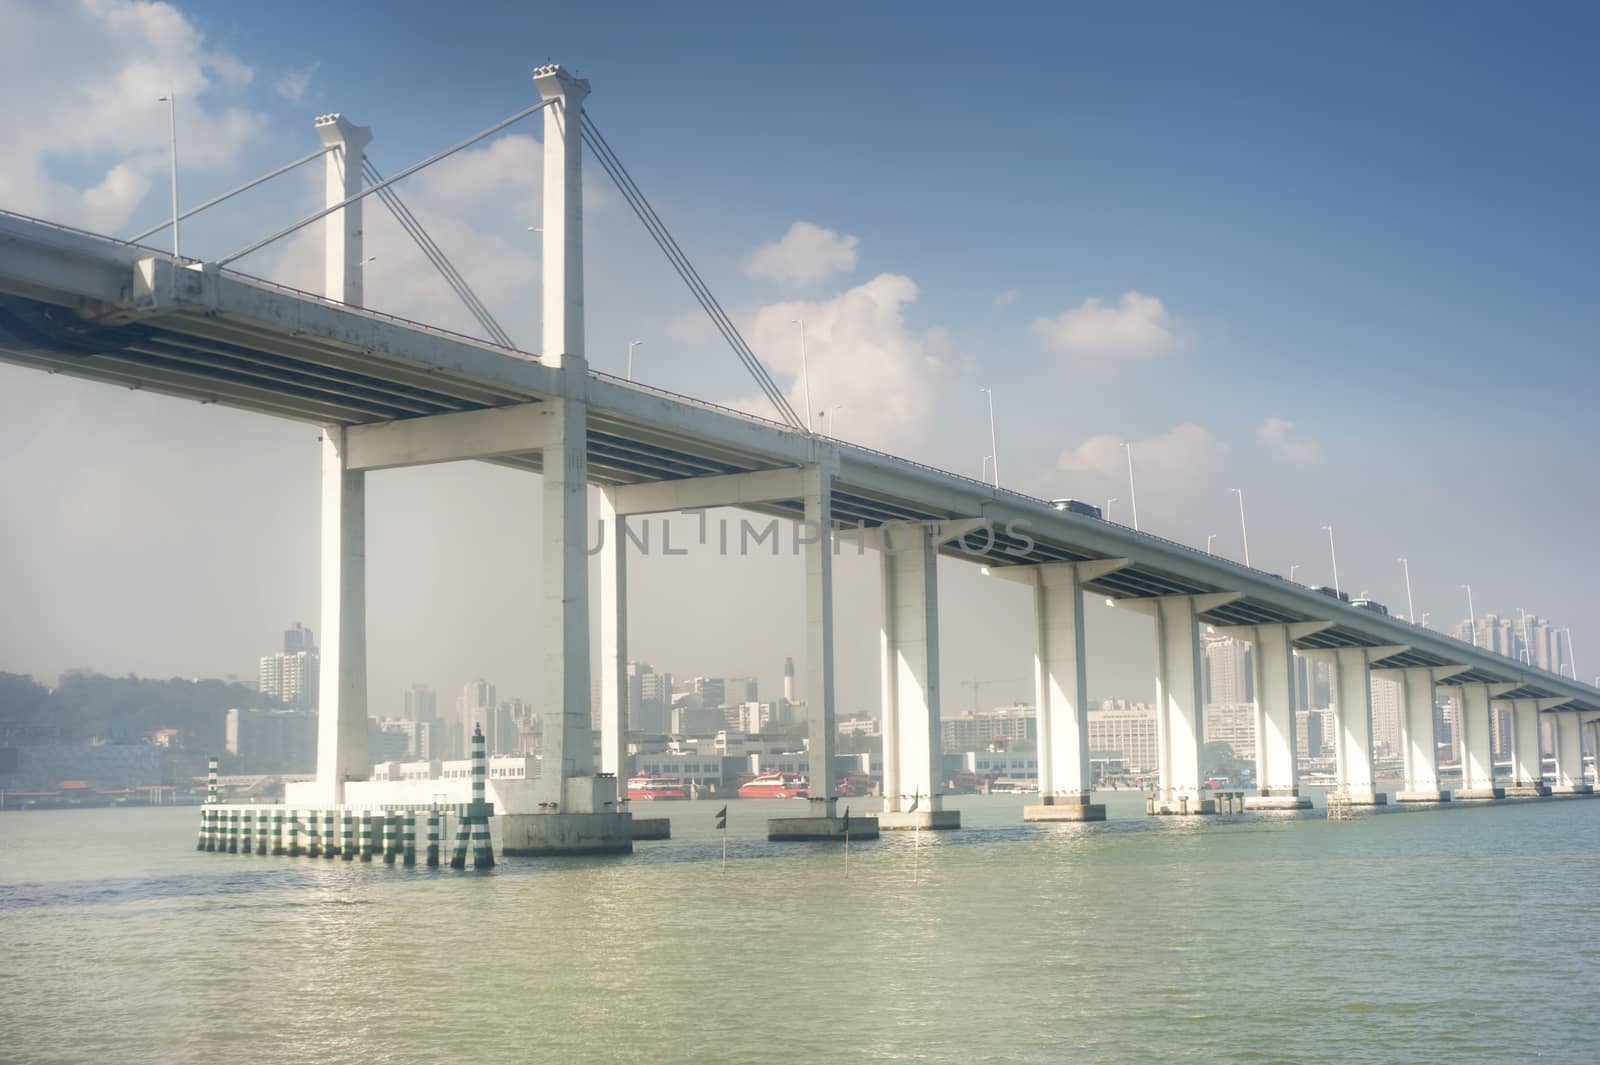 Sai Van bridge in Macau. This is the world's largest double concrete bridge span